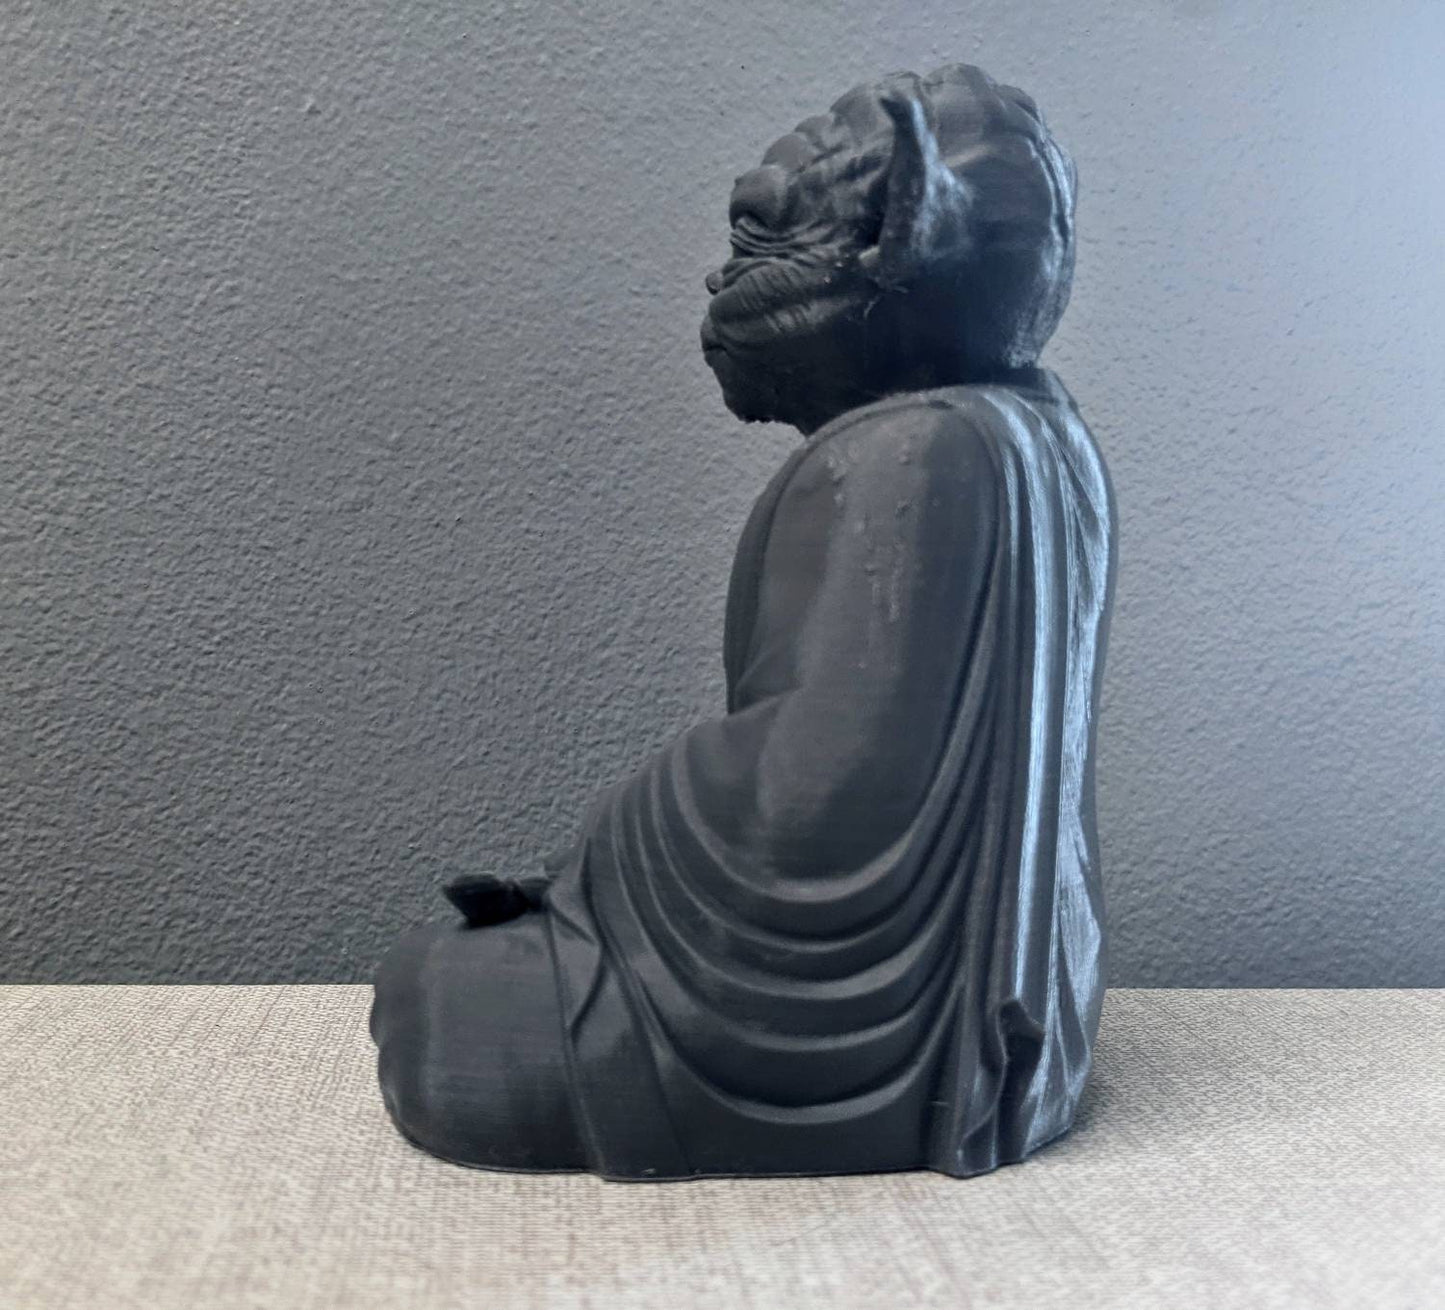 3D Printed Yoddha Figure